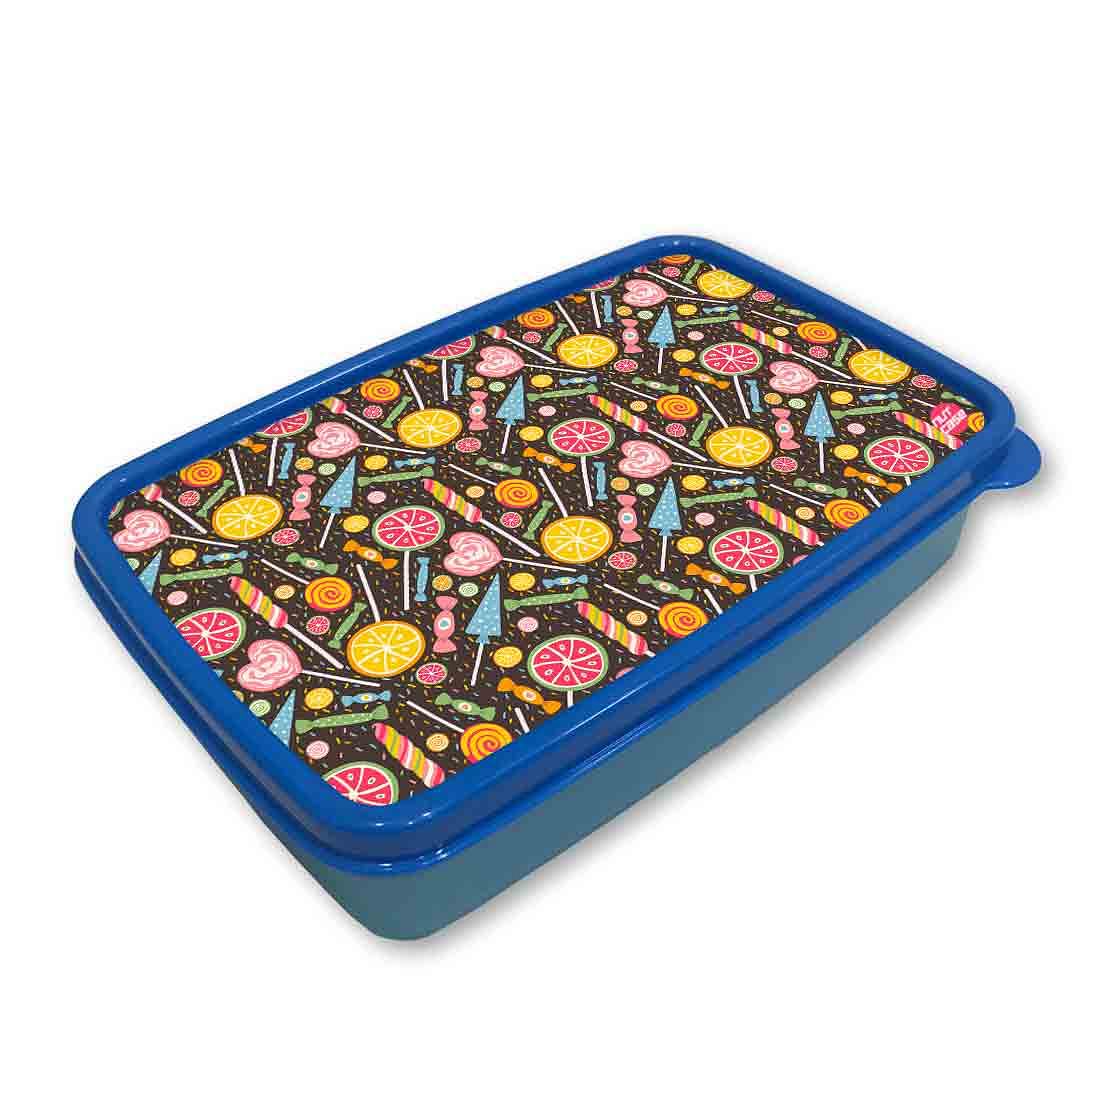 Plastic Designer Storage Box for Snacks School Boys - Candy Nutcase